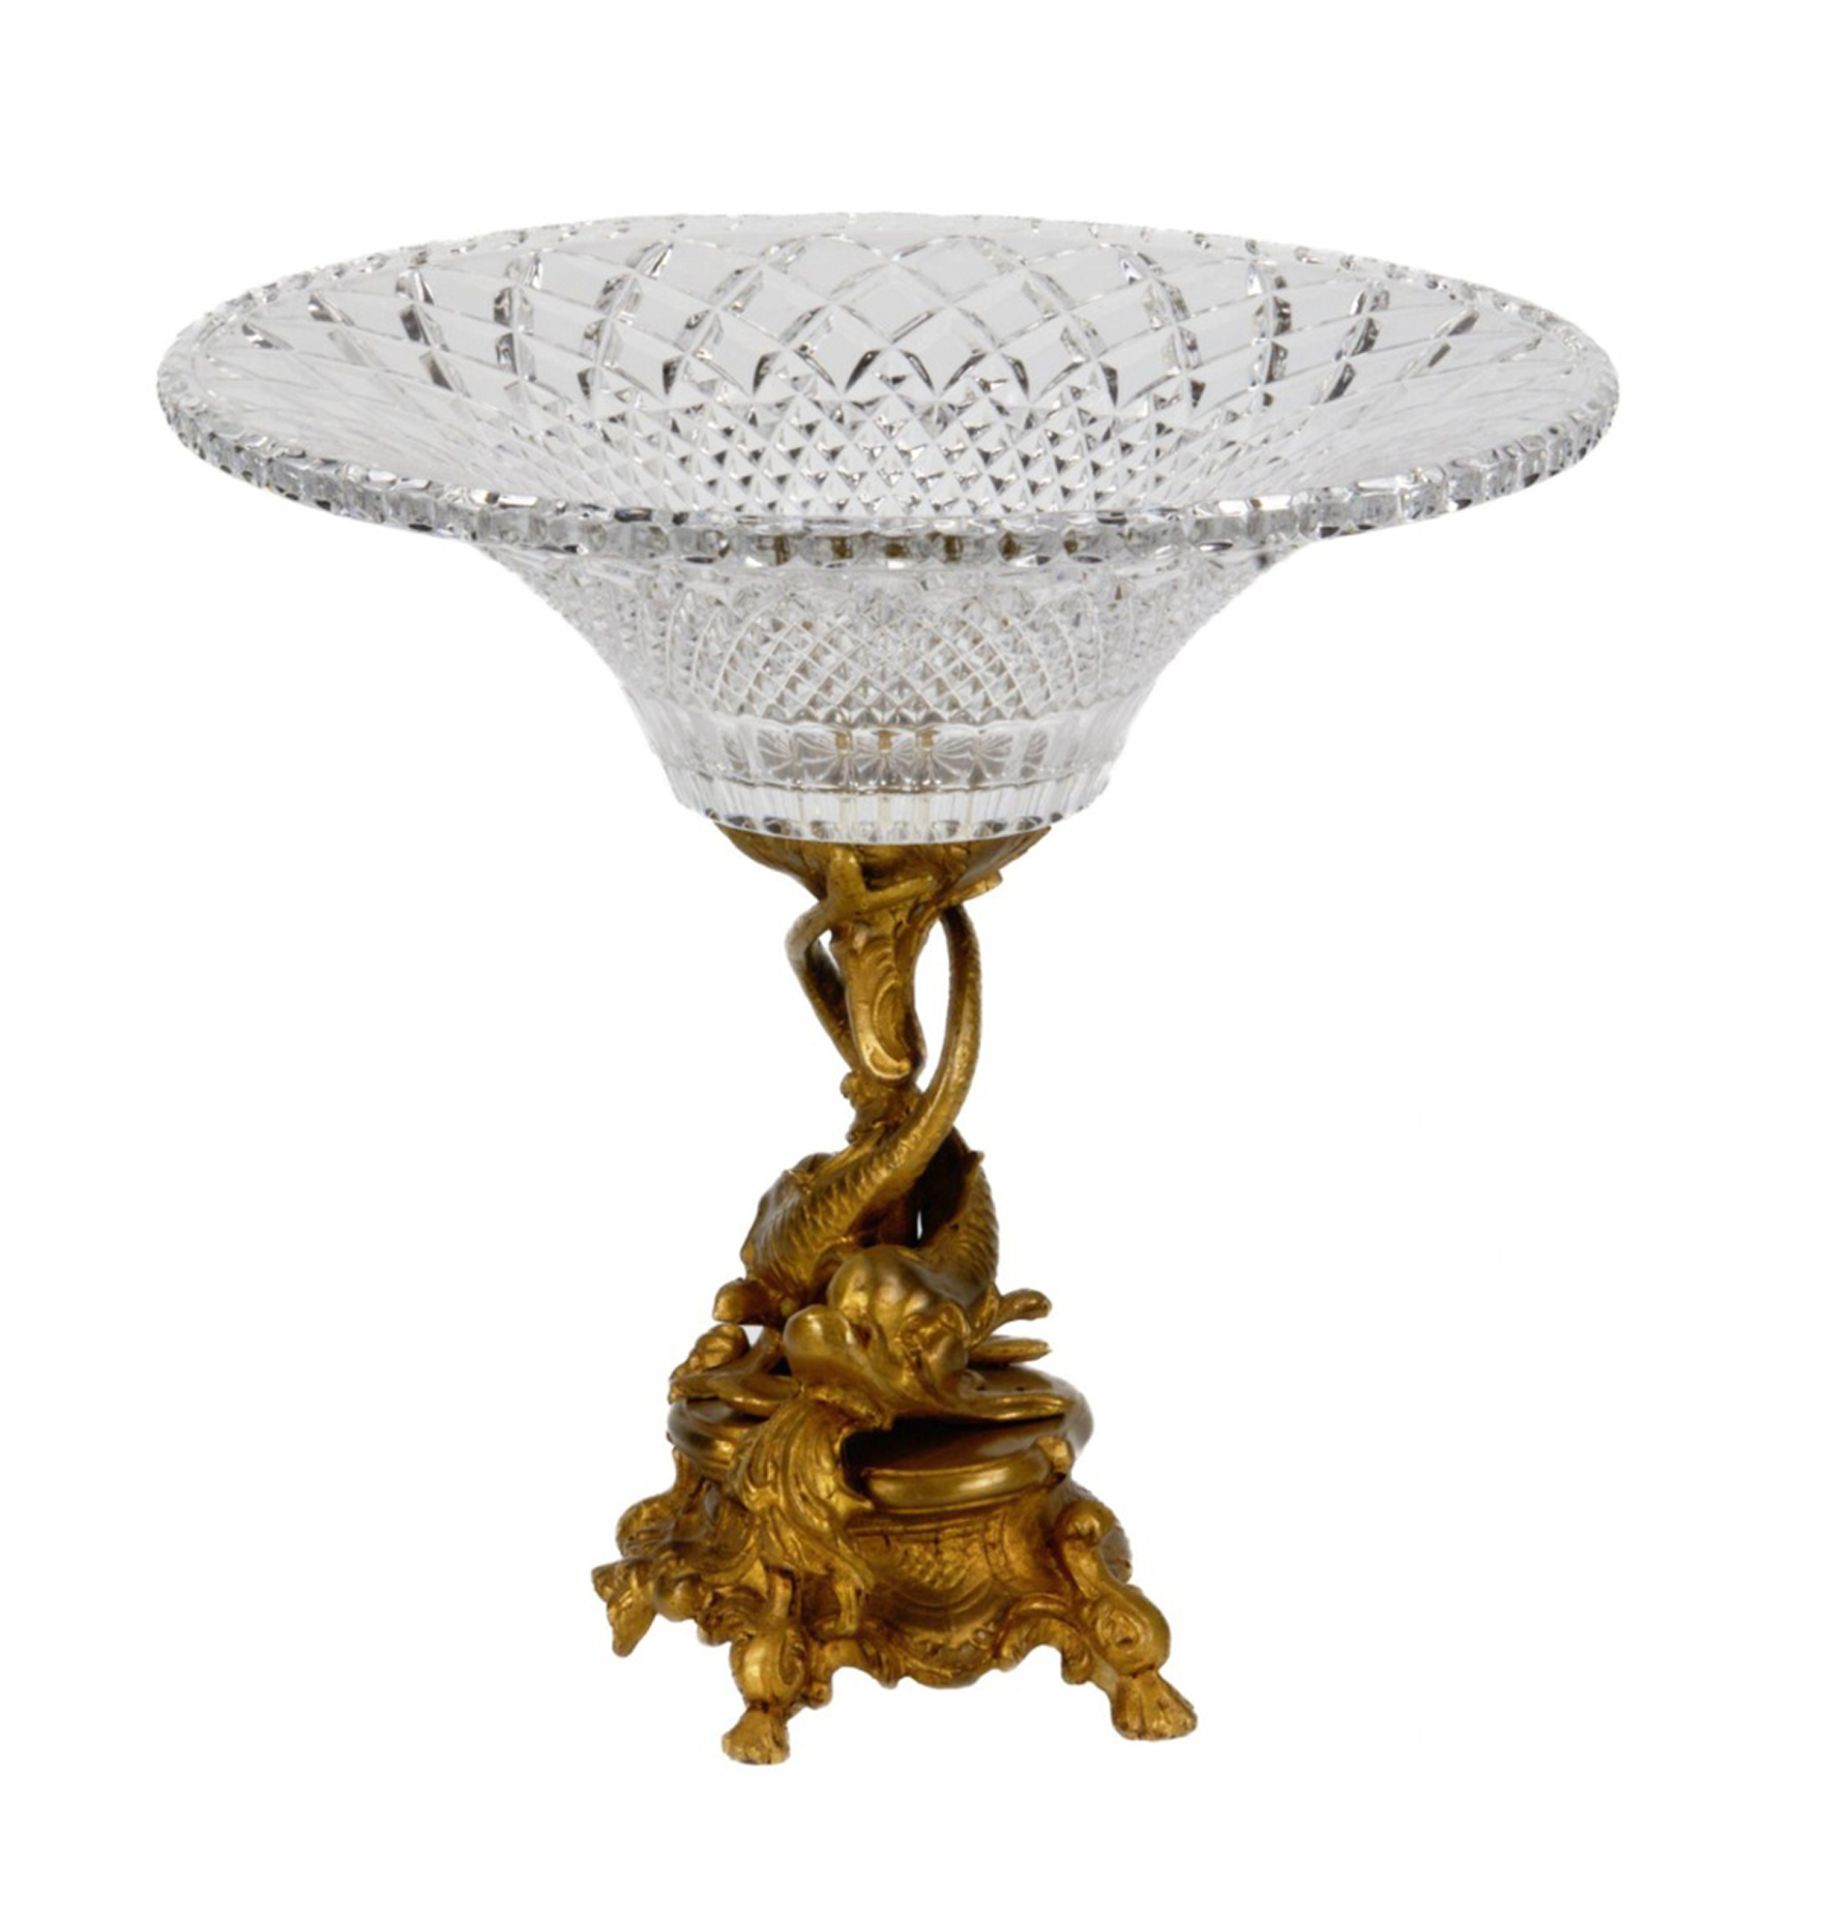 Large Napoleon III fruit bowl - Empire 19th century - Image 2 of 5